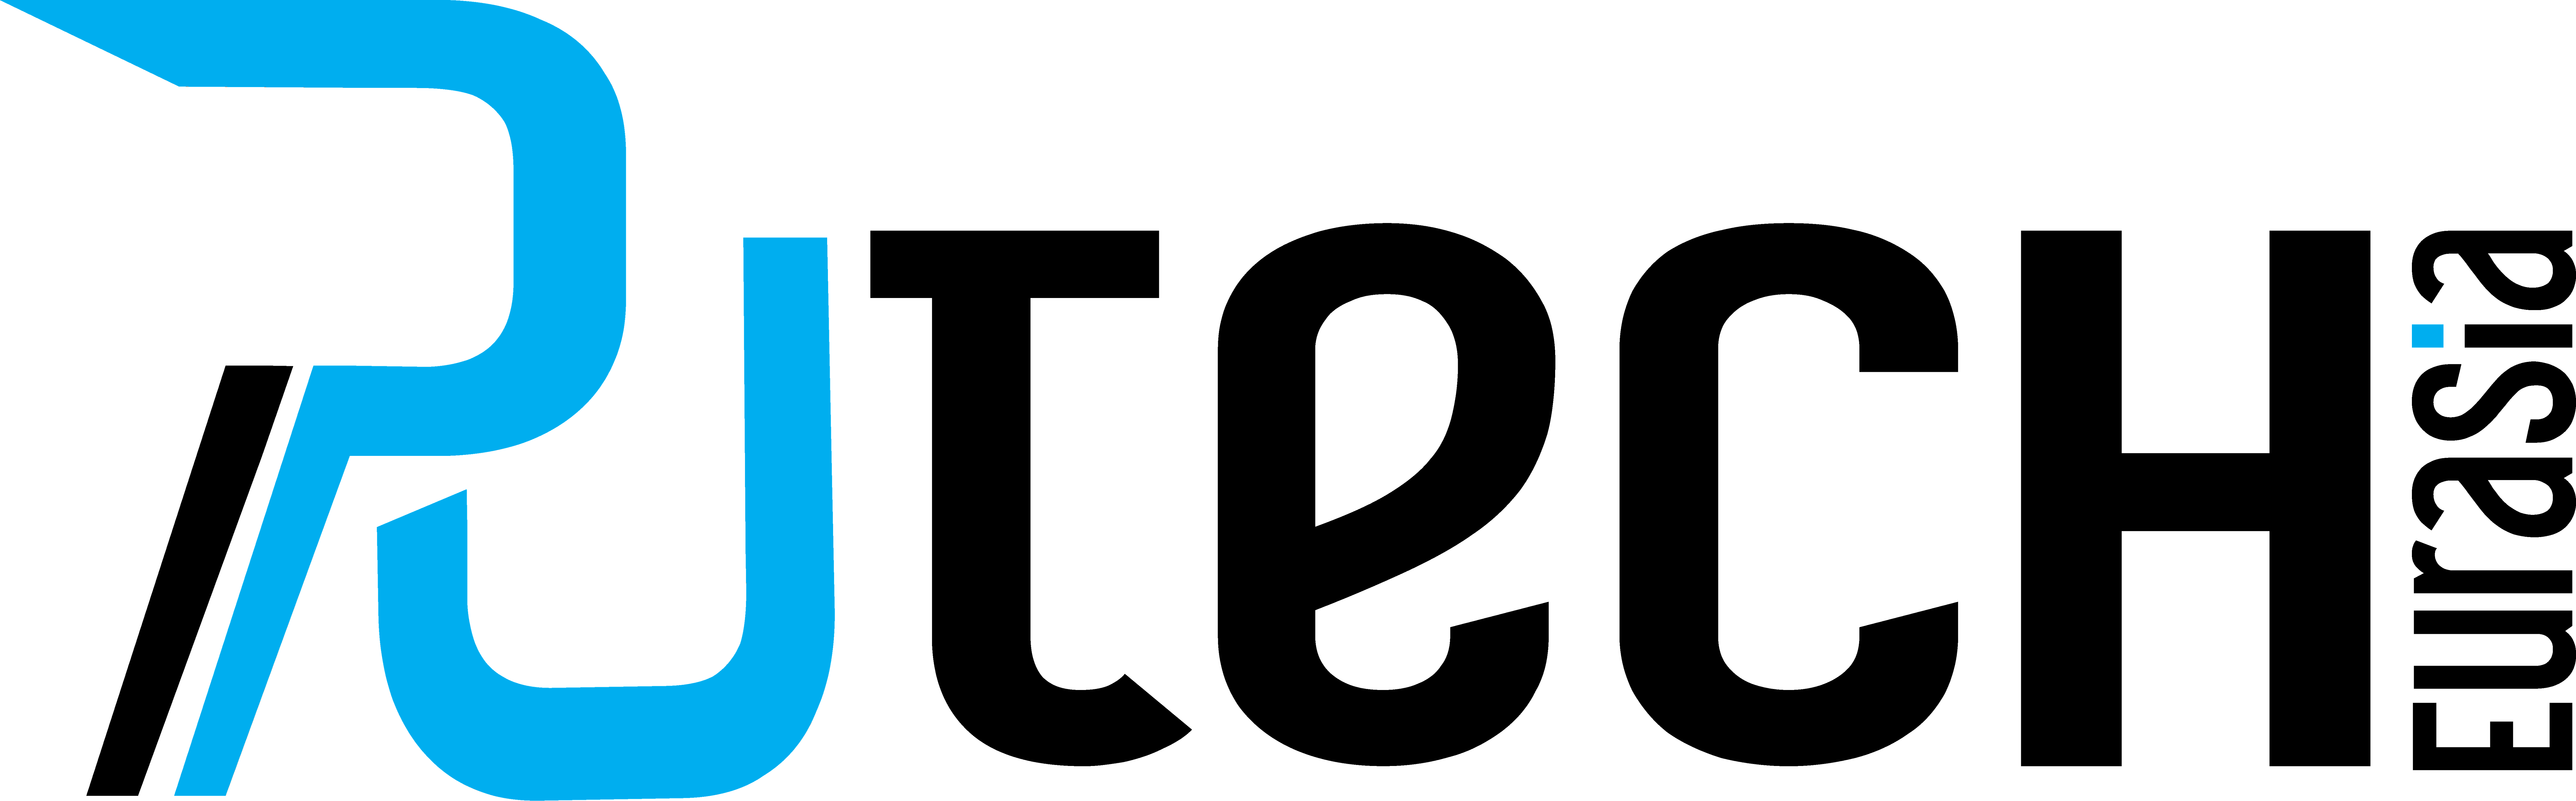 Putech Eurasia logo